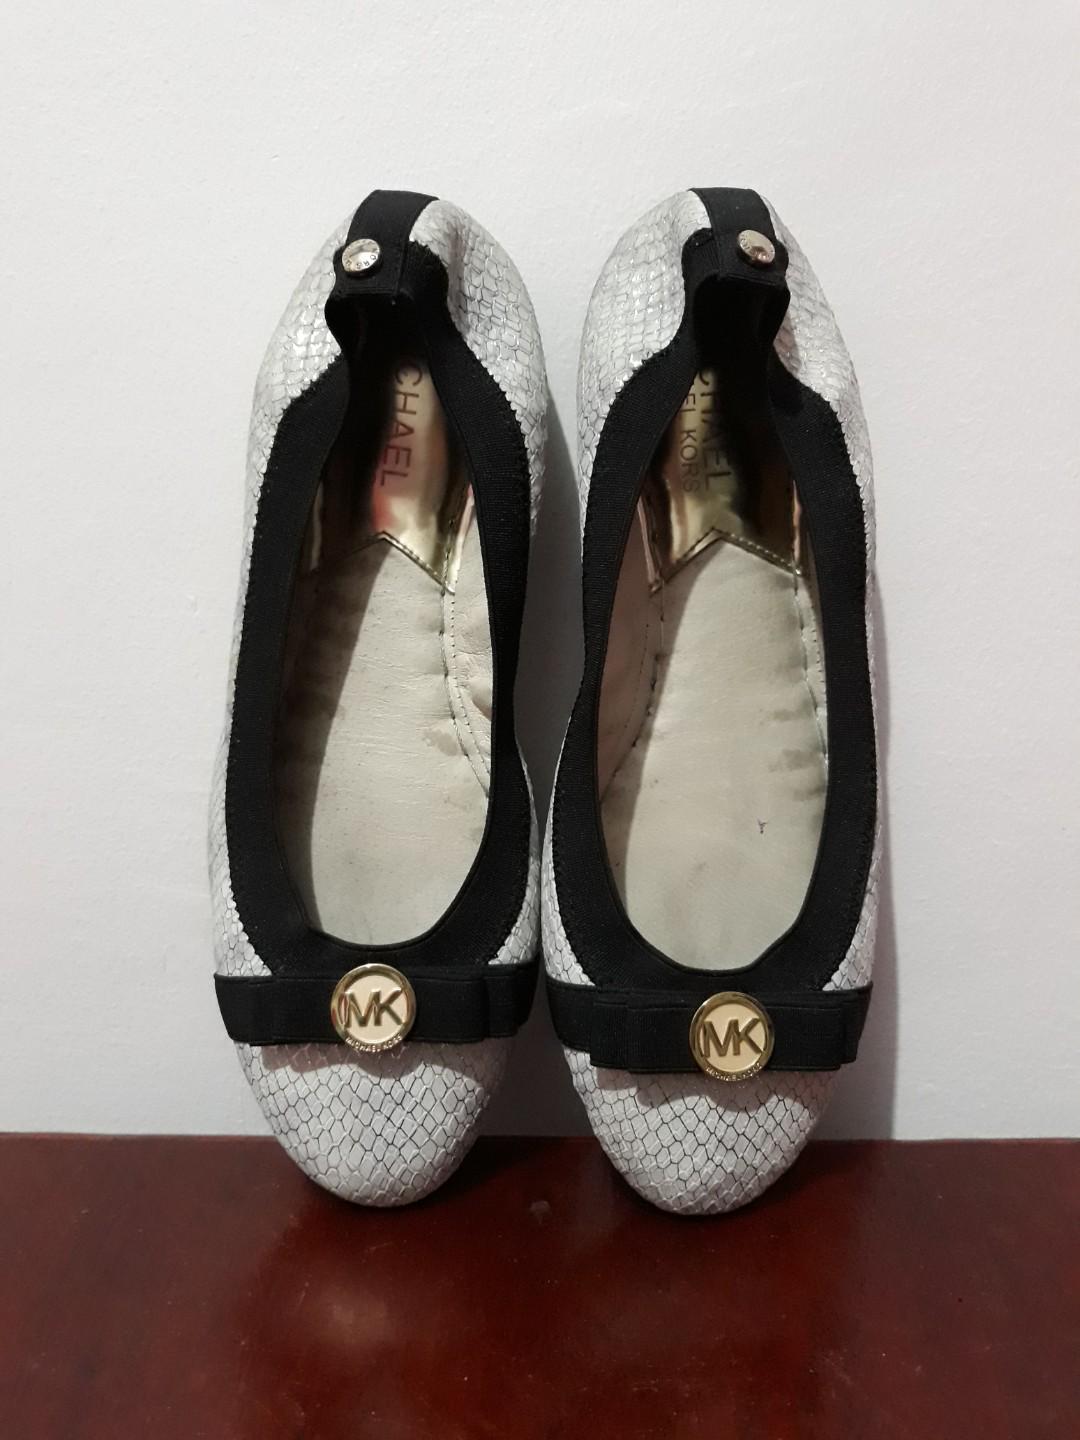 mk doll shoes michael kors on sale